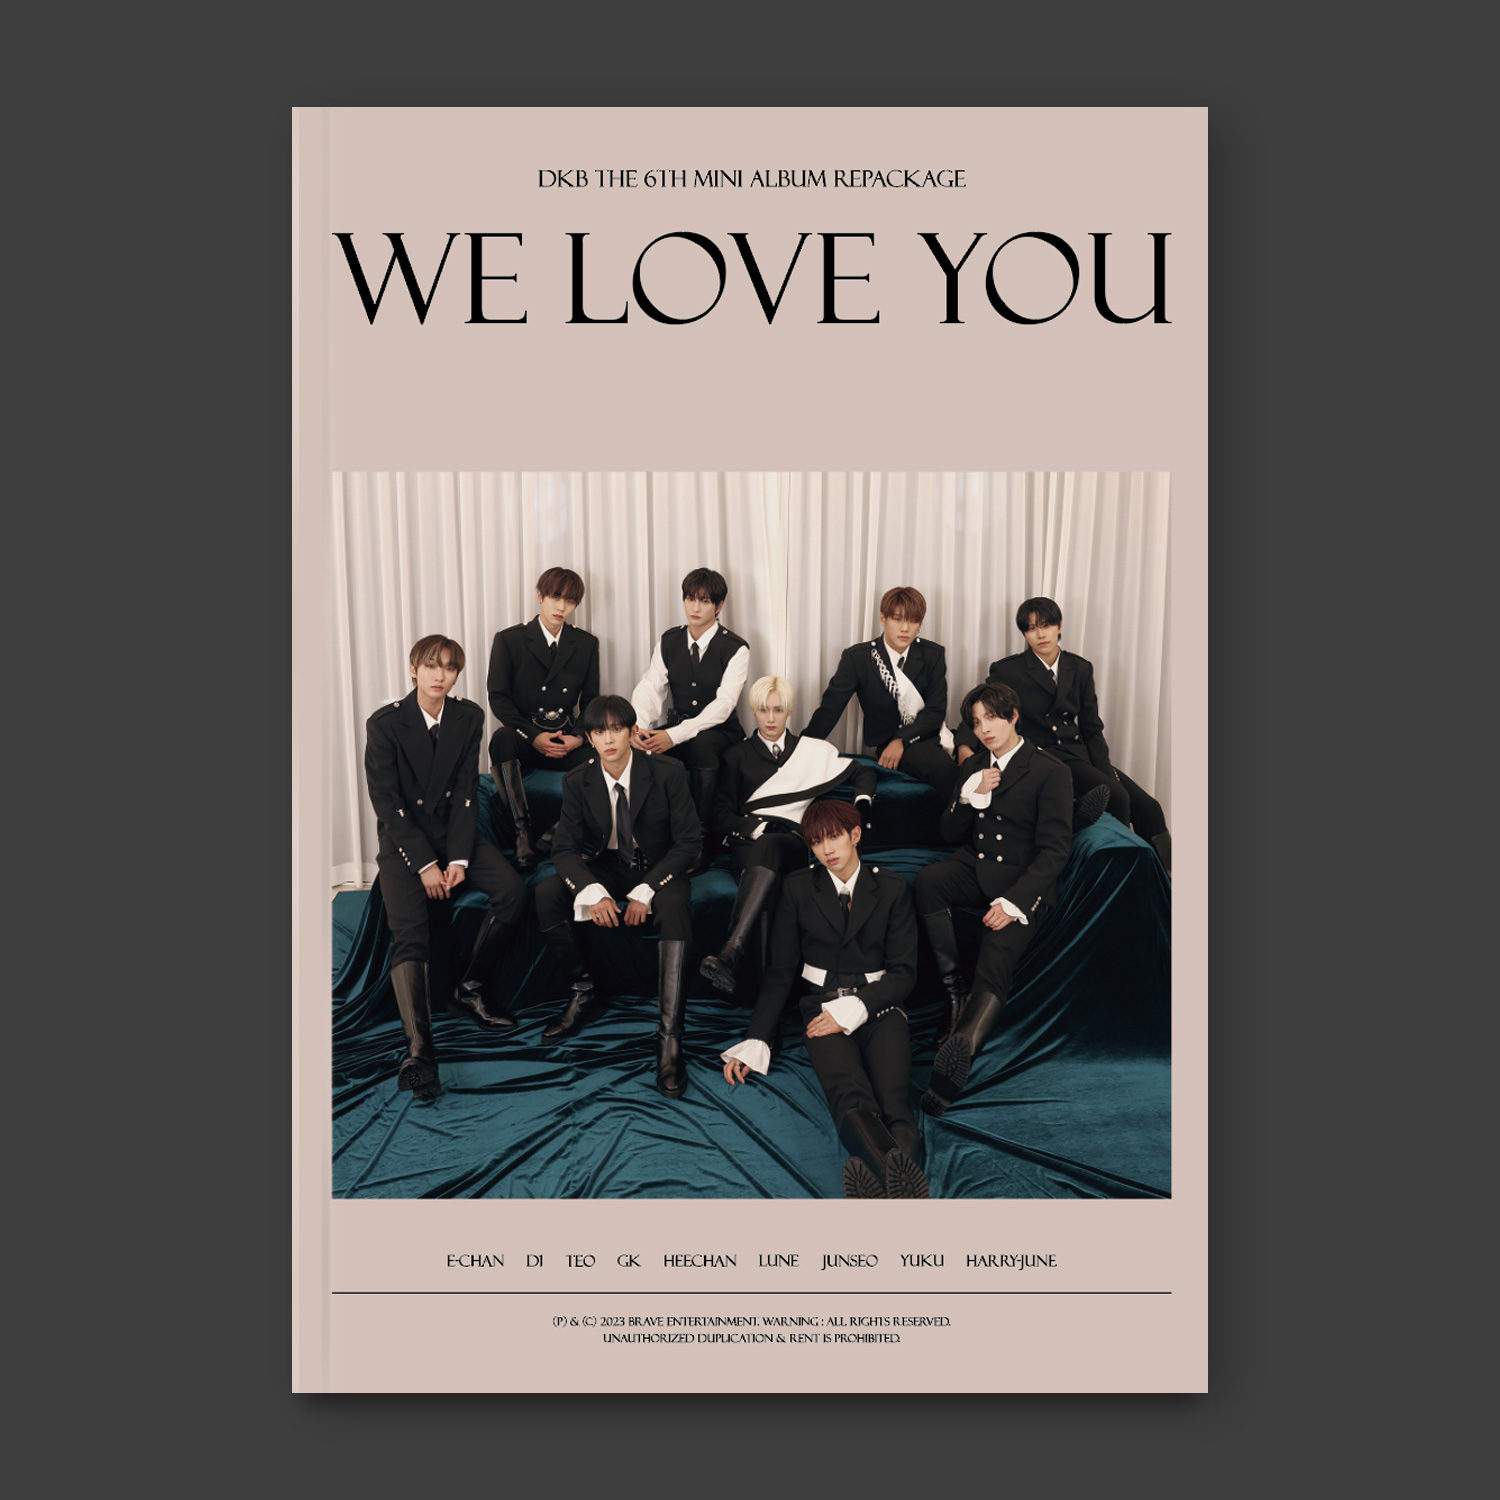 DKB 다크비 (DKB) - 미니앨범 6집 리패키지 [We Love You] (Night Ver.)케이팝스토어(kpop store)